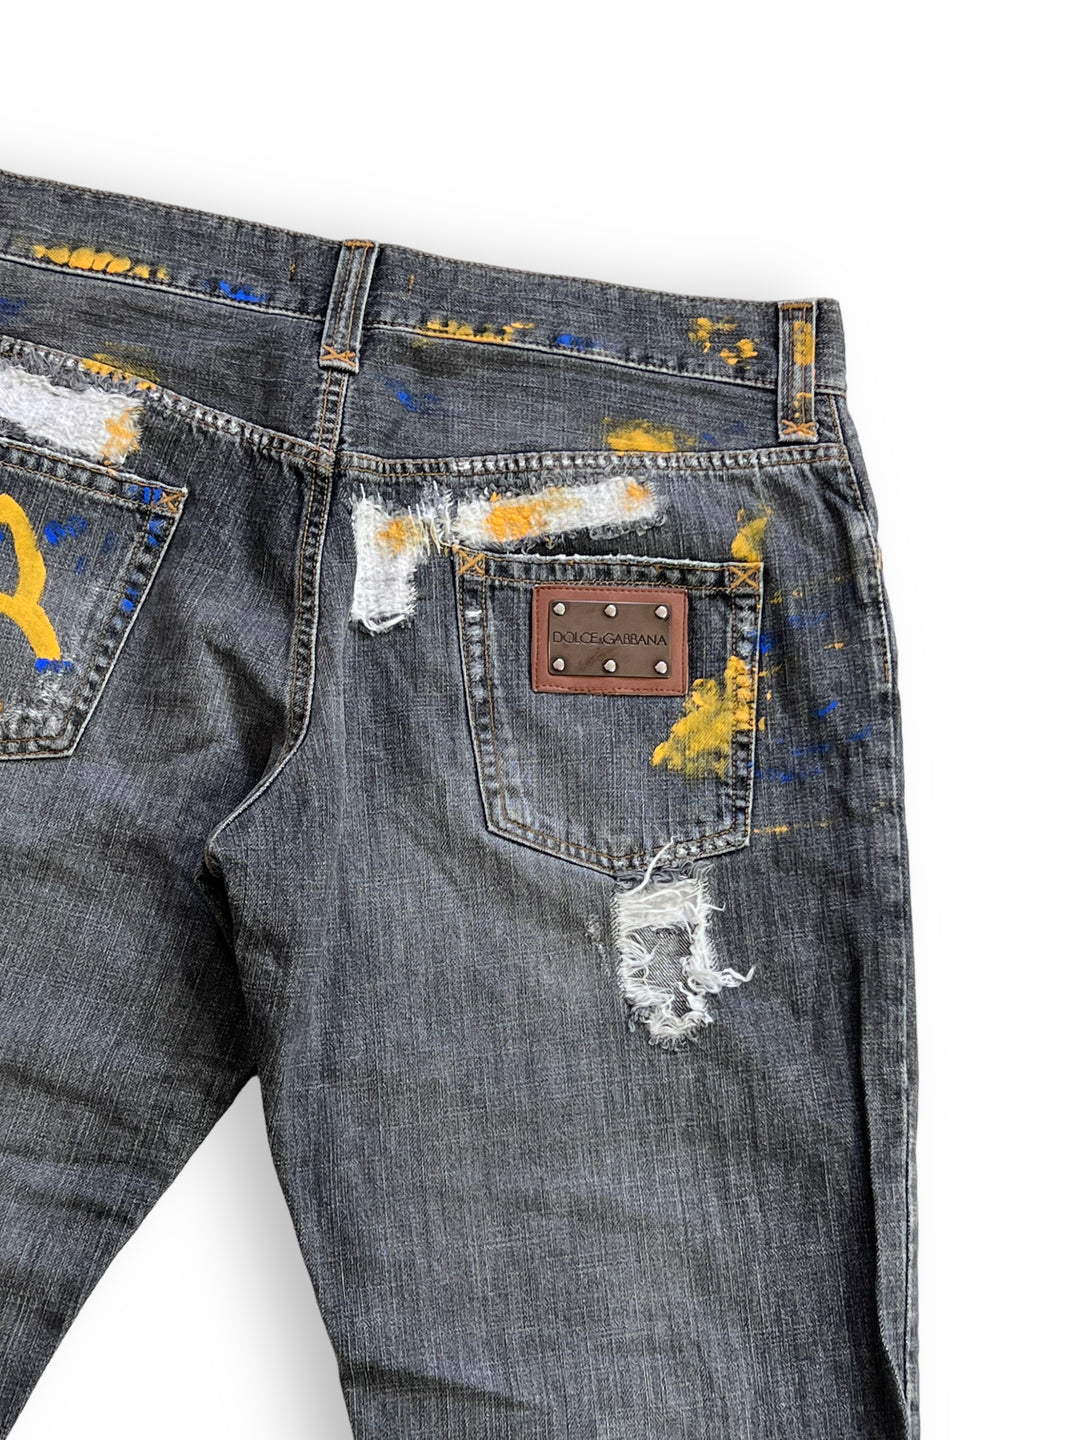 Vintage Dolce & Gabbana Jeans Long Shorts Men's Large